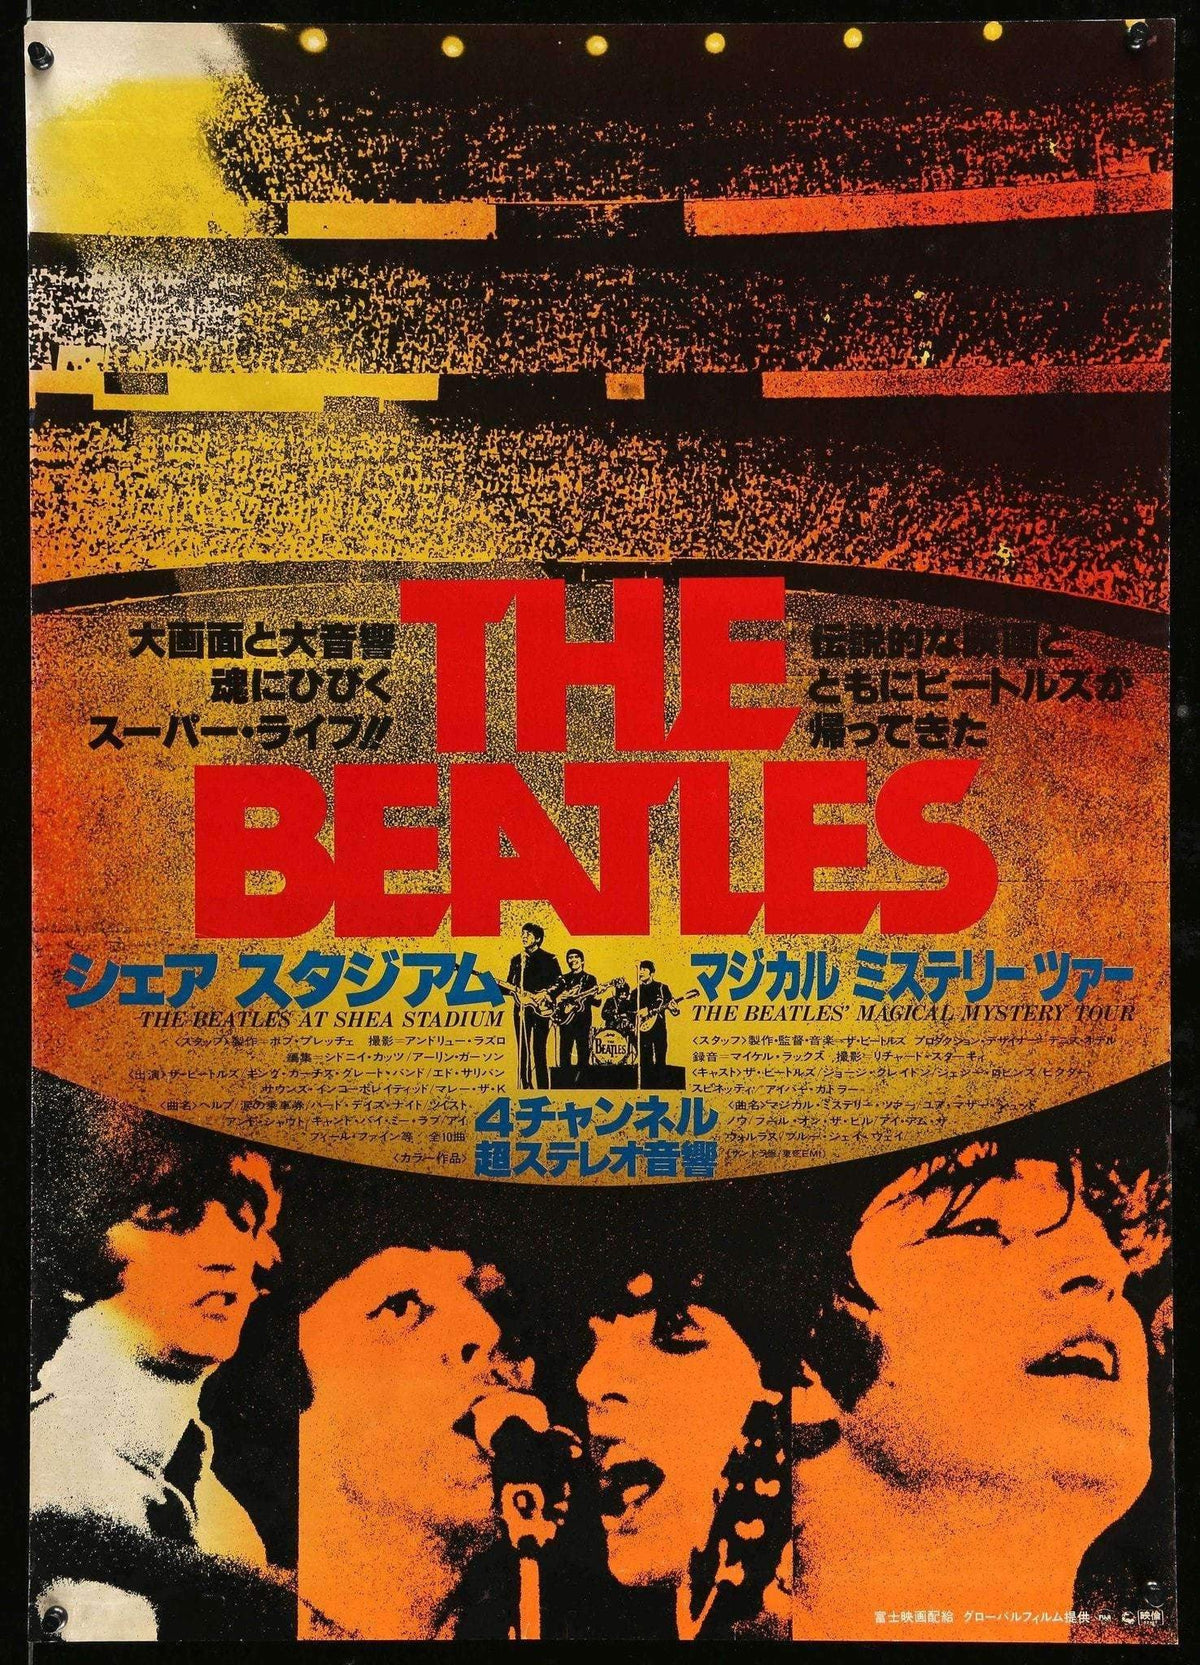 Beatles at Shea Stadium/Magical Mystery Tour (1977) original movie poster for sale at Original Film Art